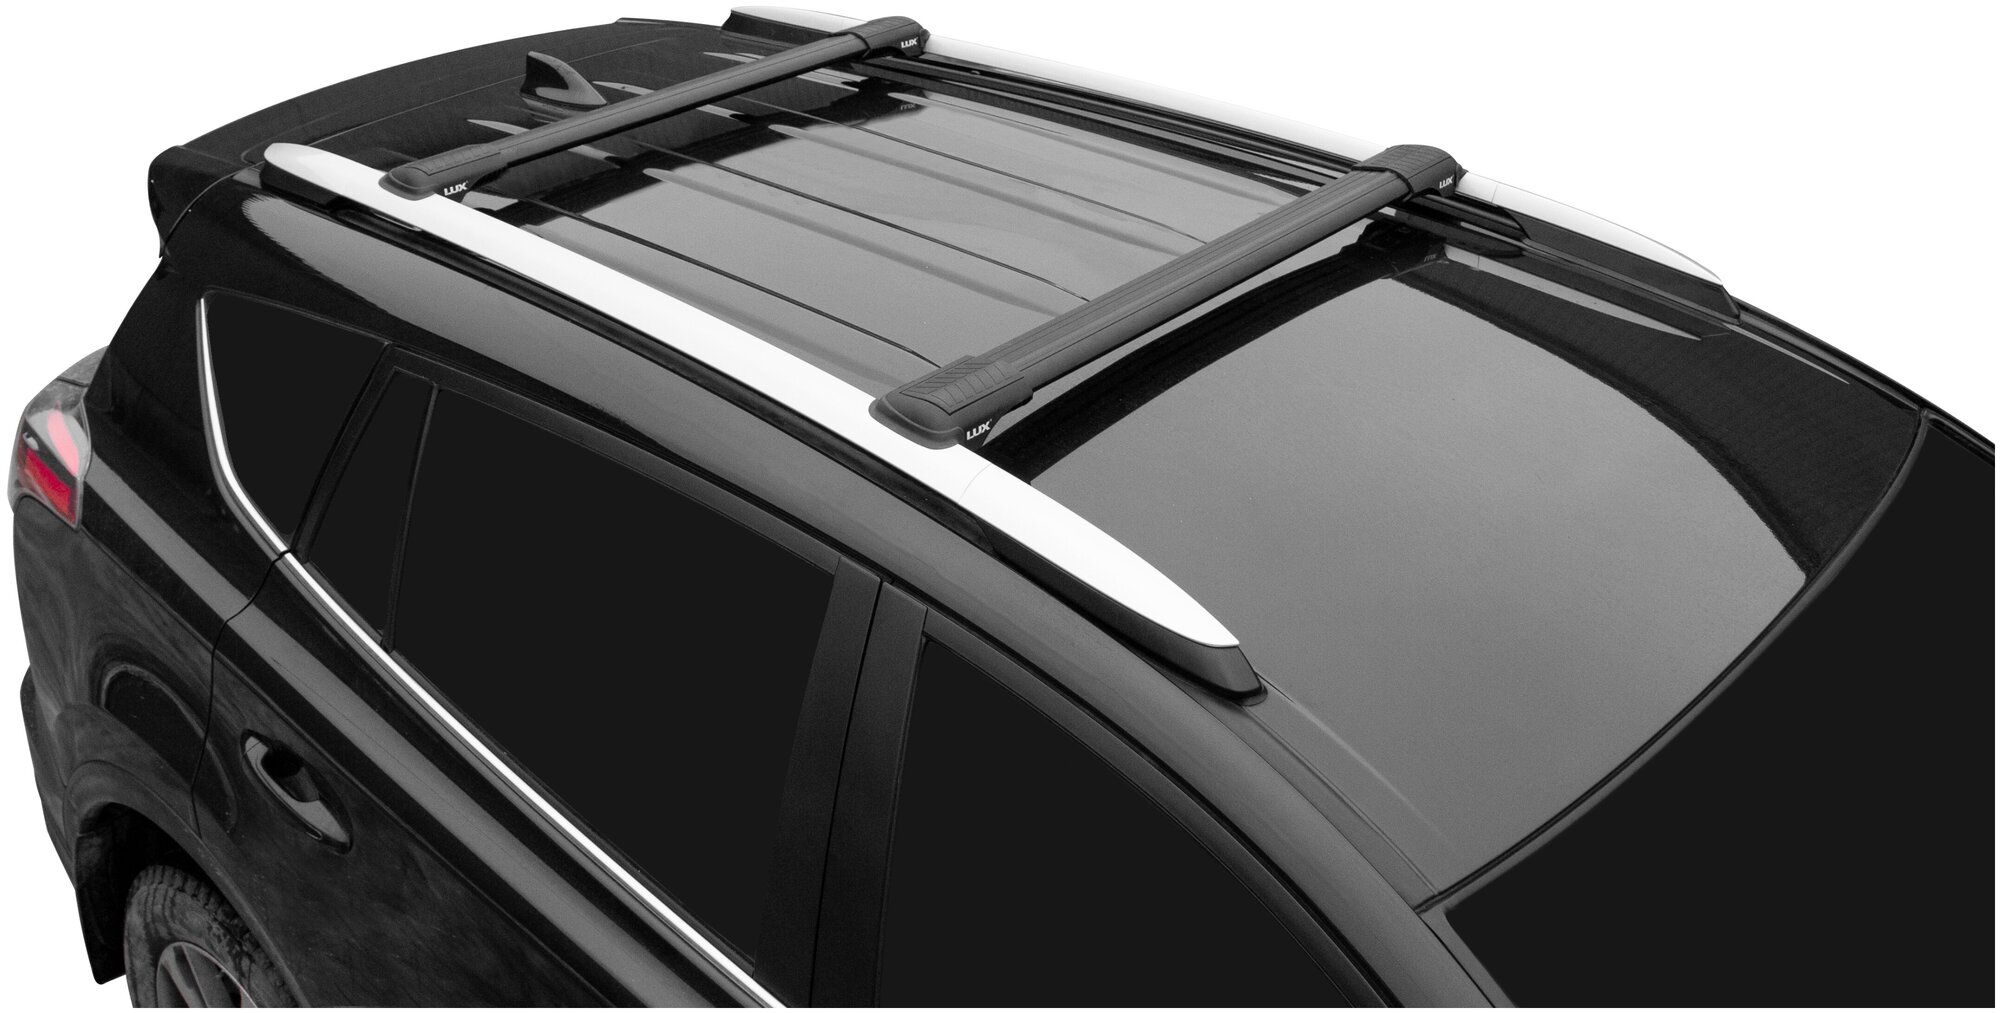 Багажная система LUX хантер L54-B черная для автомобилей с рейлингами (Lux 791927)